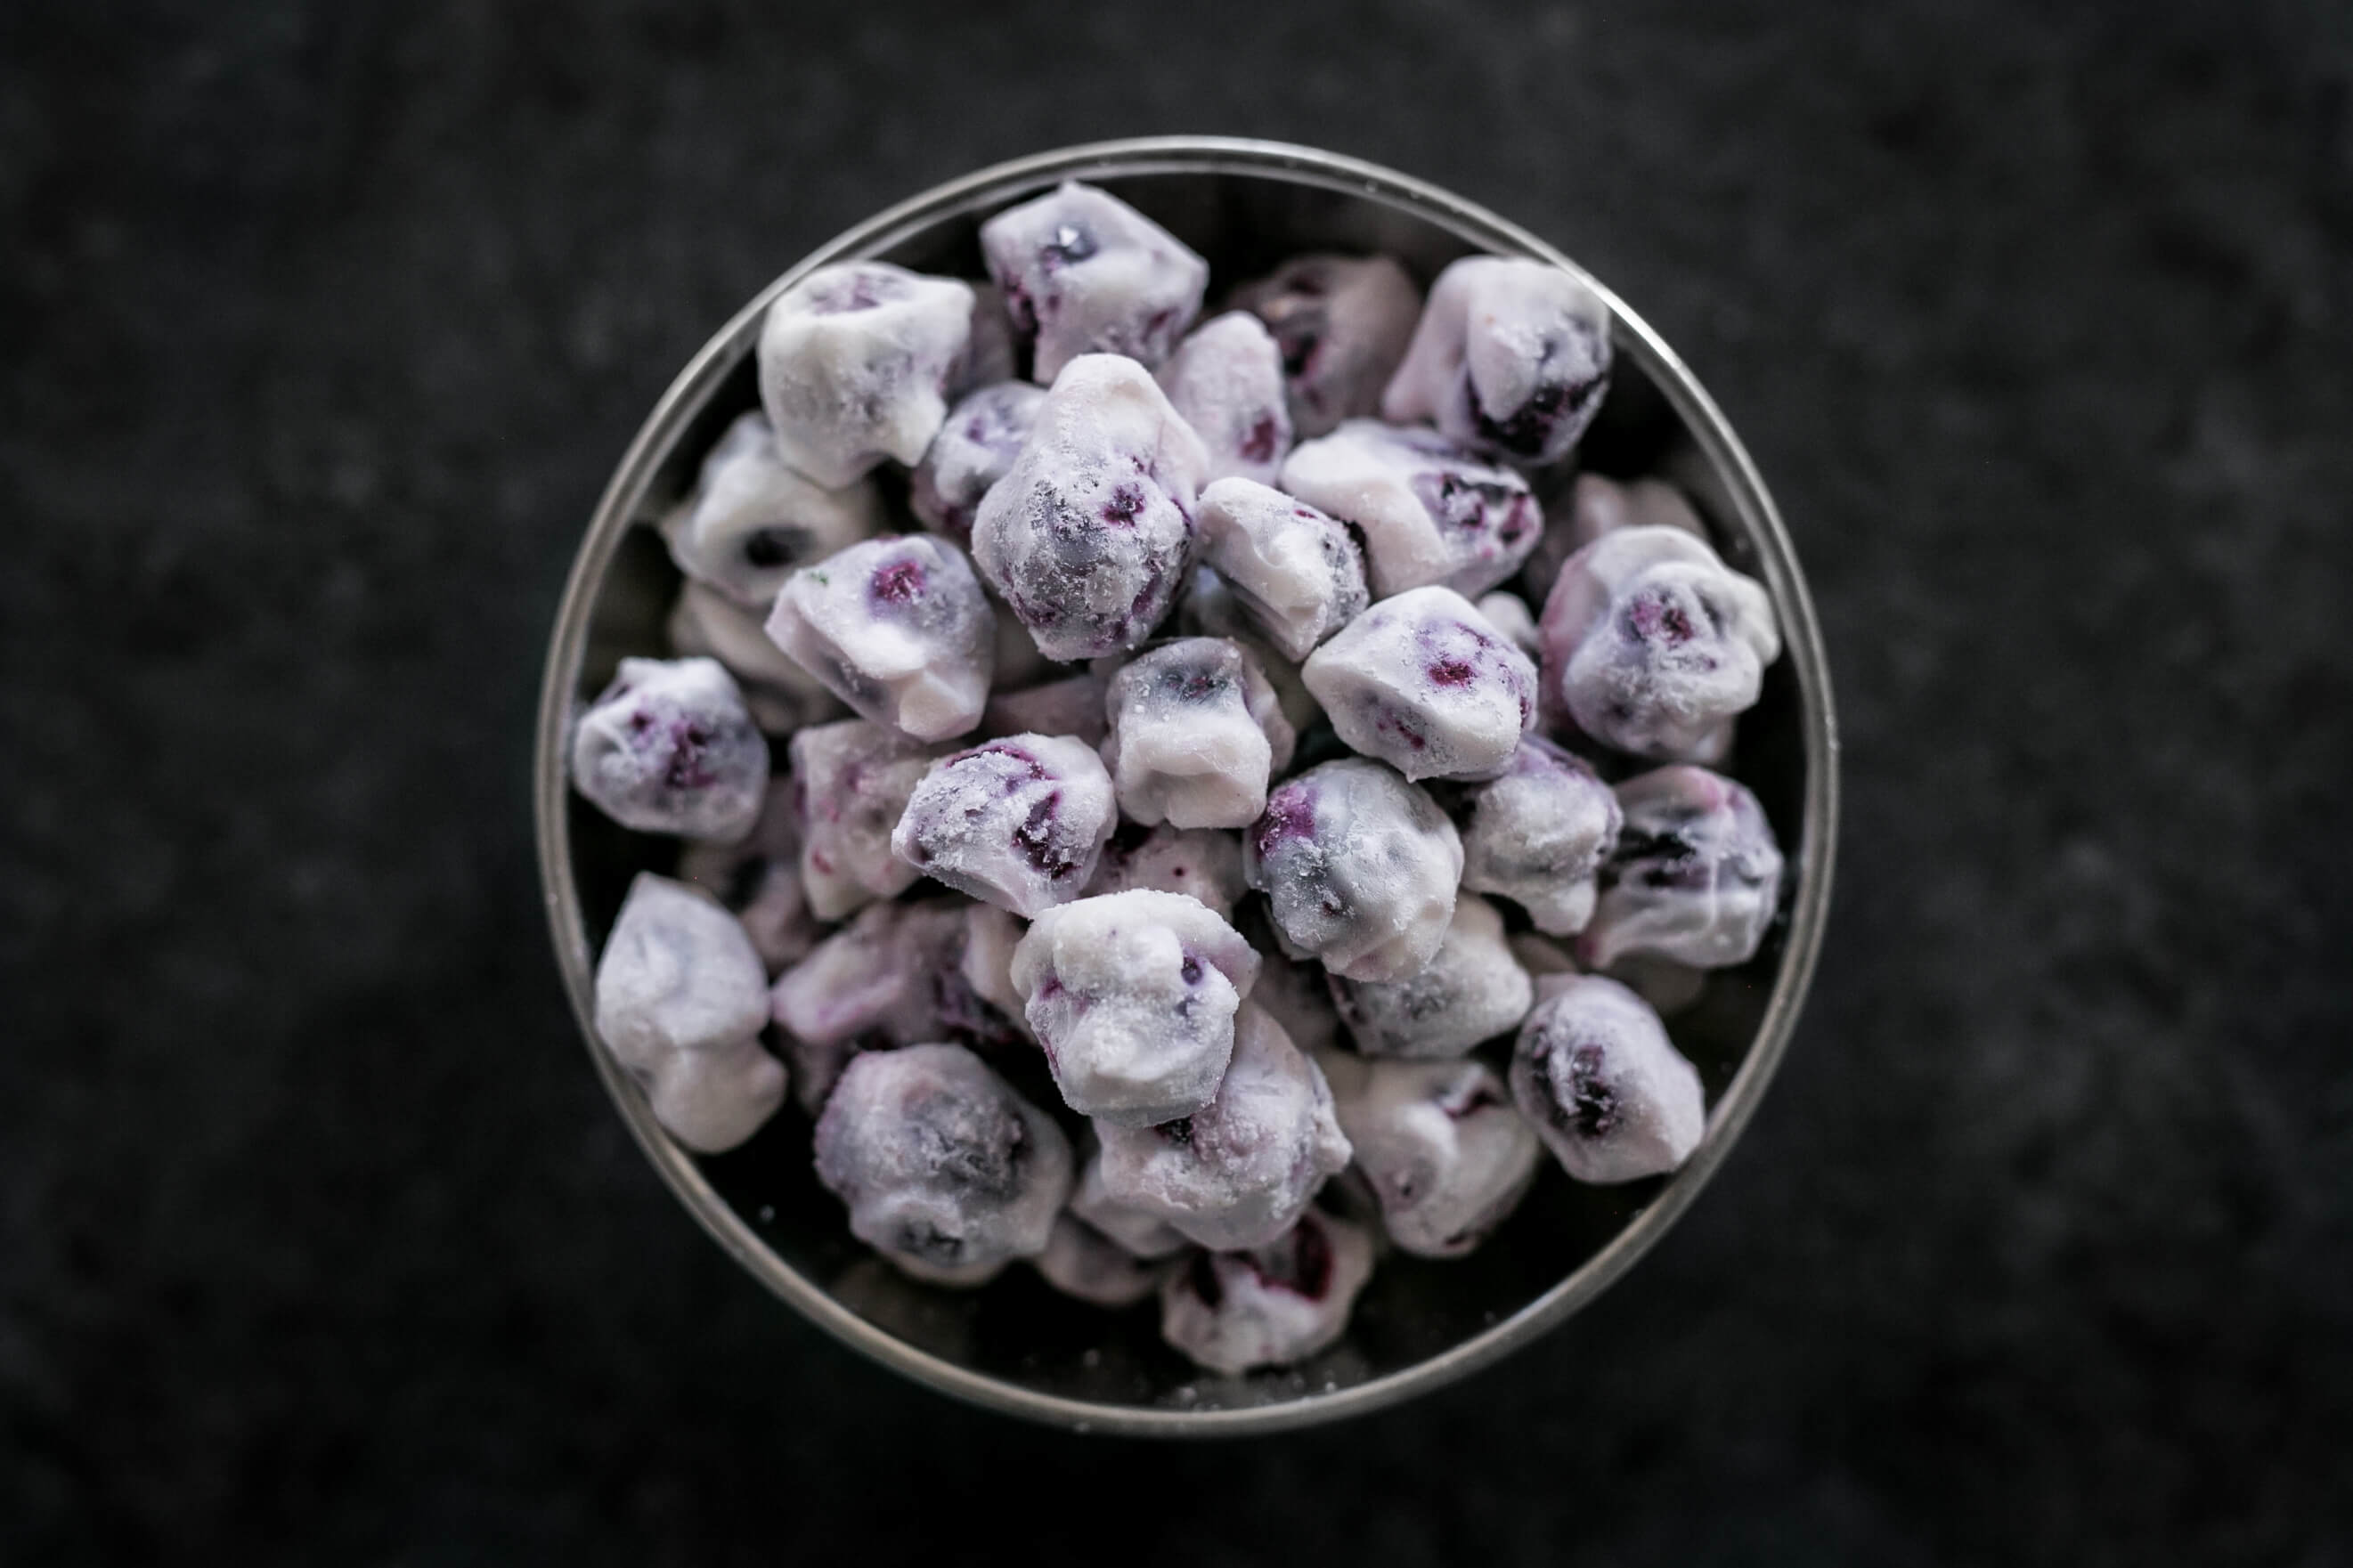 20 Freezer Friendly Meal Ideas: Frozen Yogurt Covered Berries